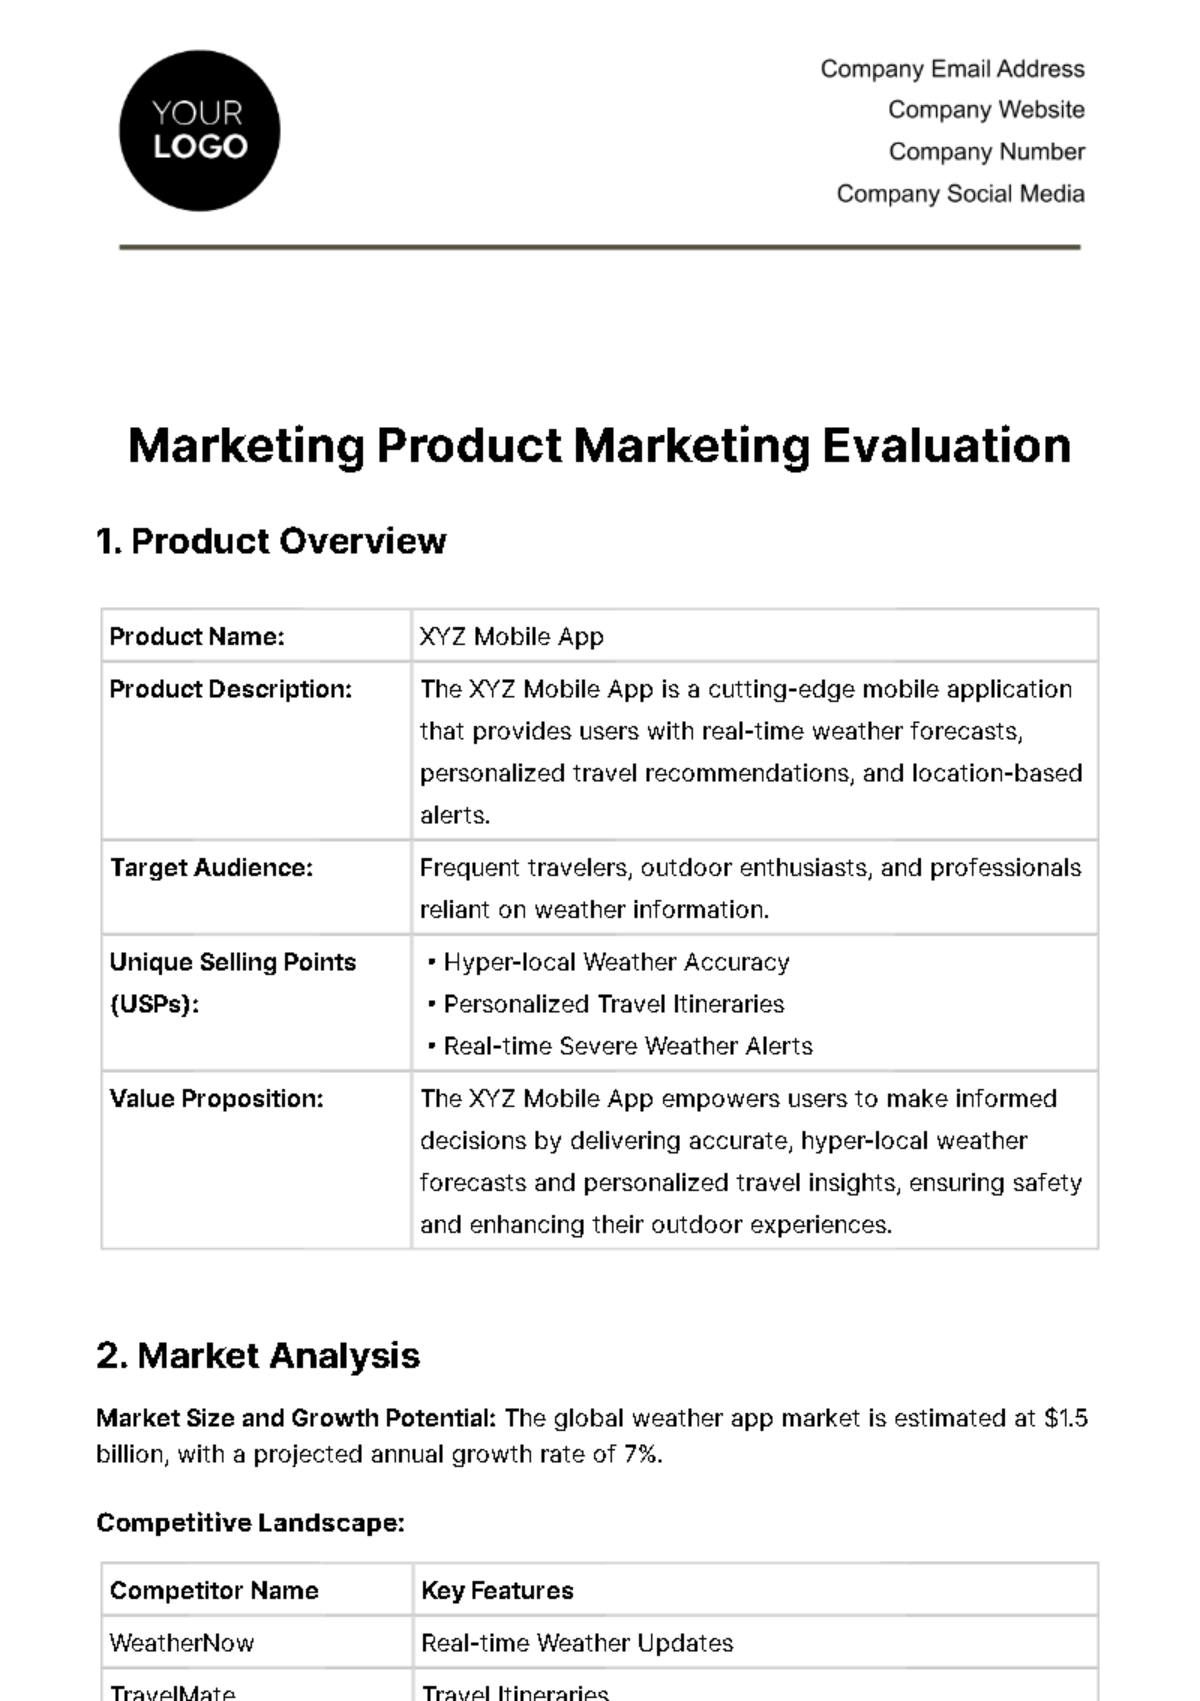 Free Marketing Product Marketing Evaluation Template